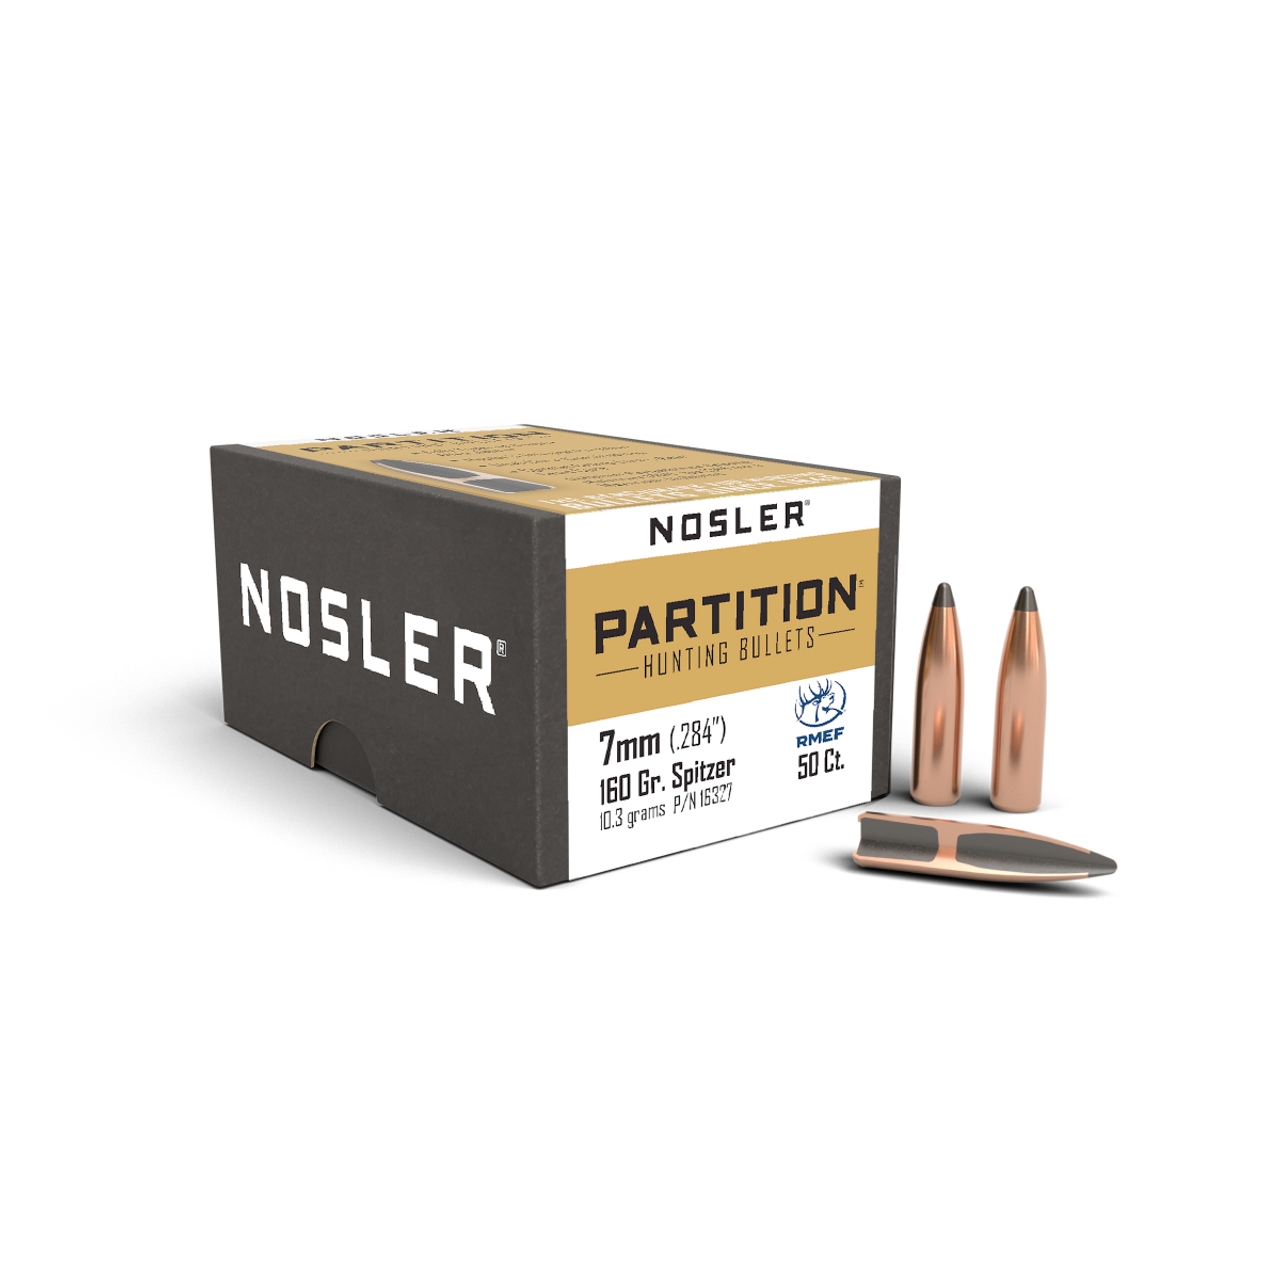 Nosler Rifle Bullets 7mm, 160Gr Partition Spitzer (.284), Box of 50